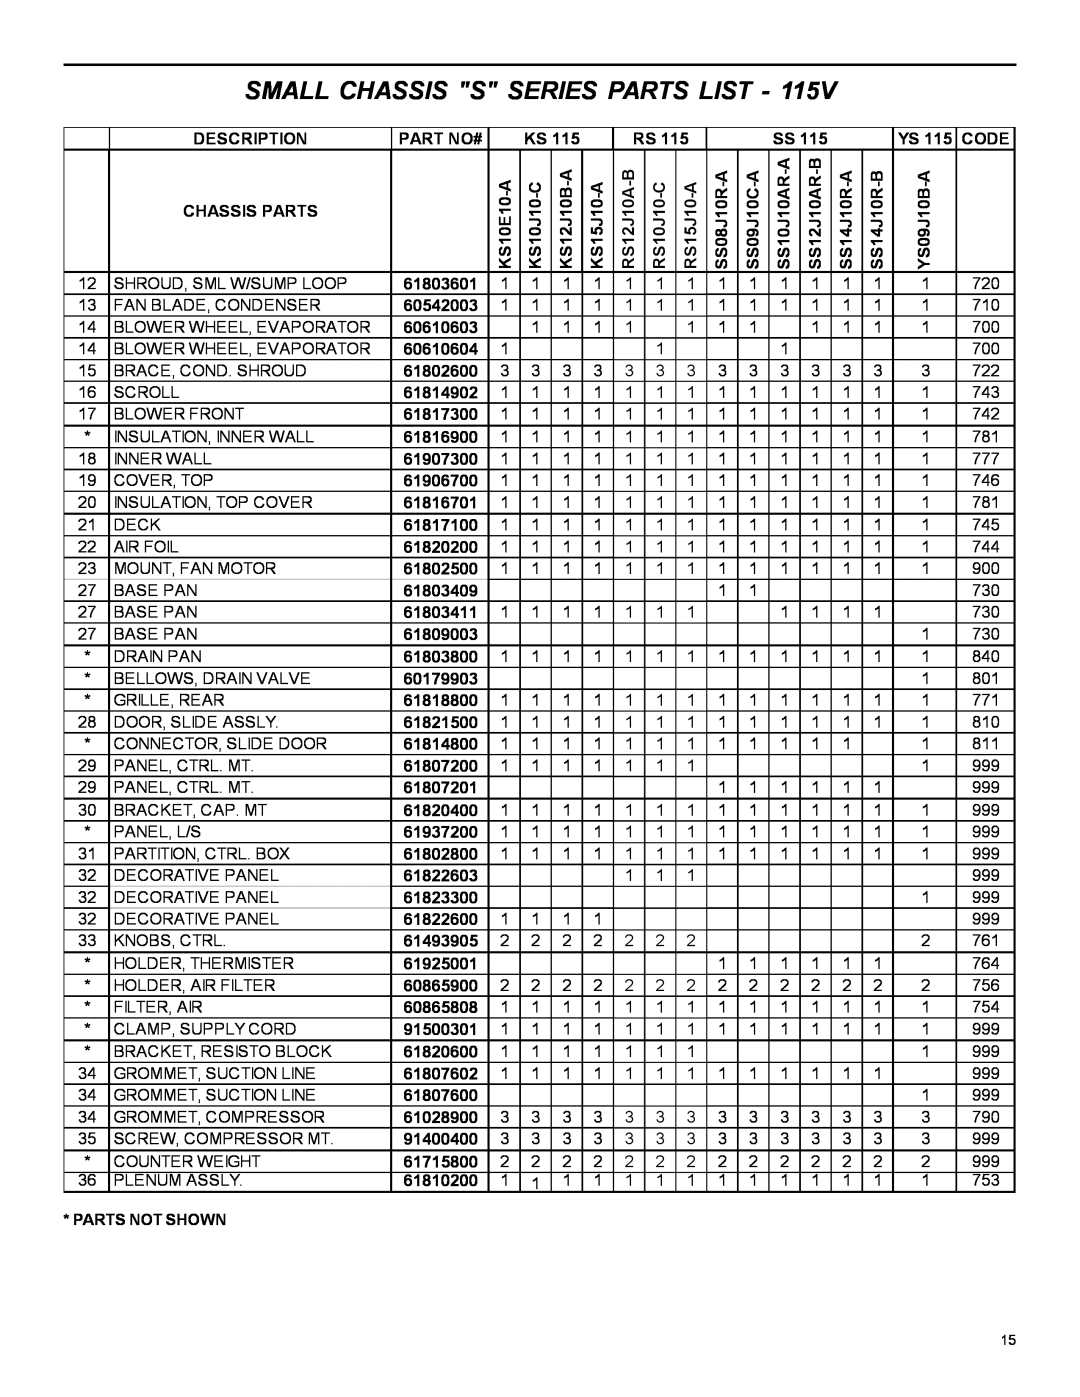 Friedrich 2004 manual Small Chassis S Series Parts List, Description 